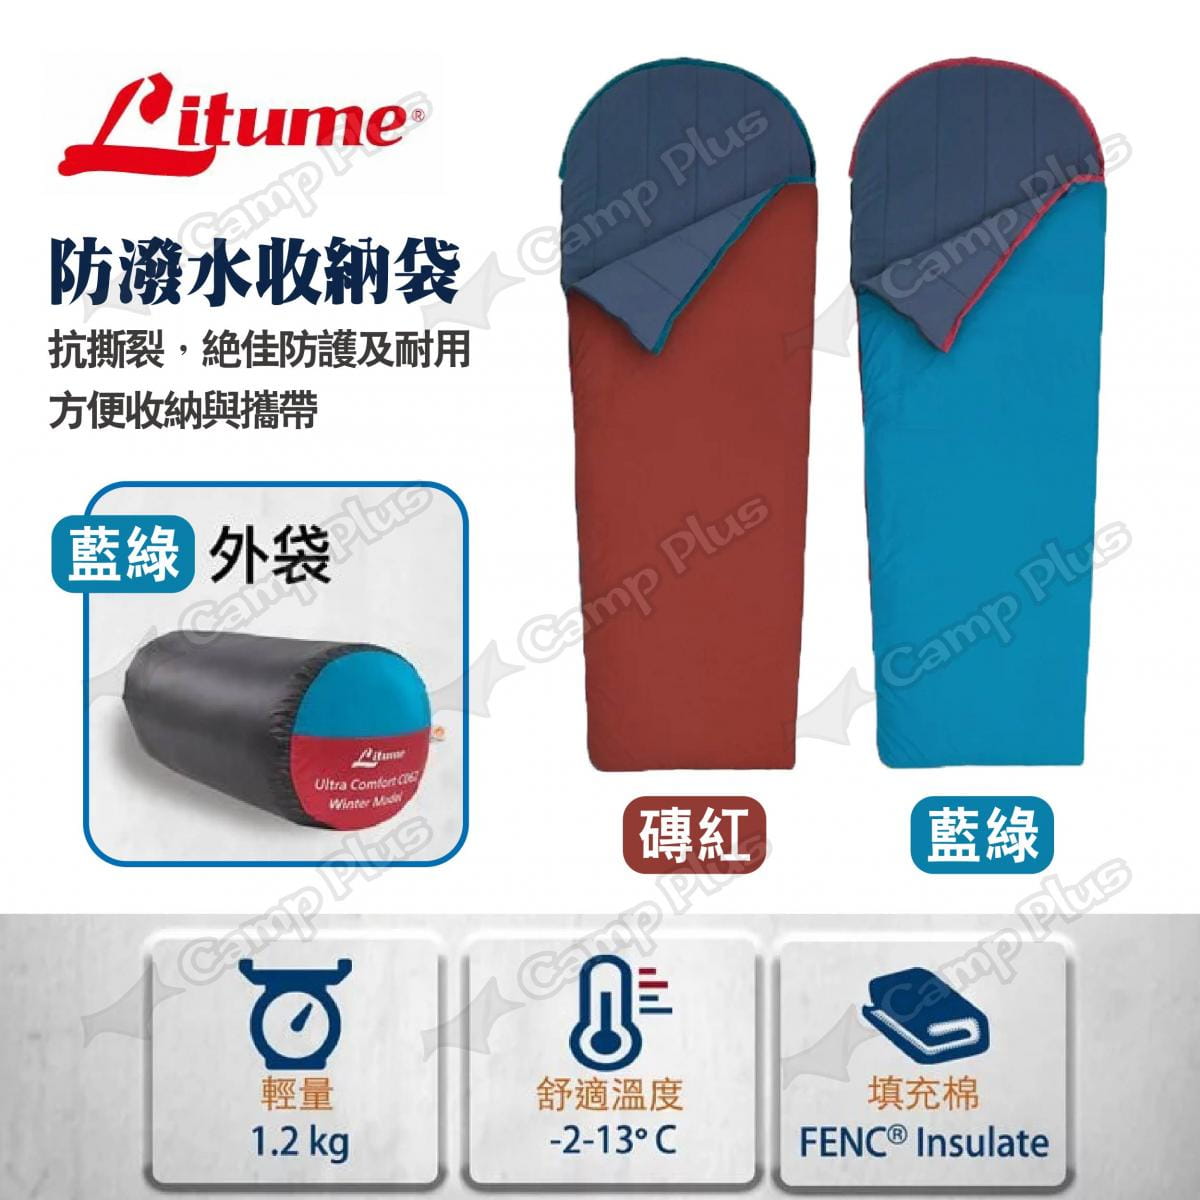 【LITUME】意都美 FENC® Insulate 科技棉睡袋 C062藍綠 悠遊戶外 2